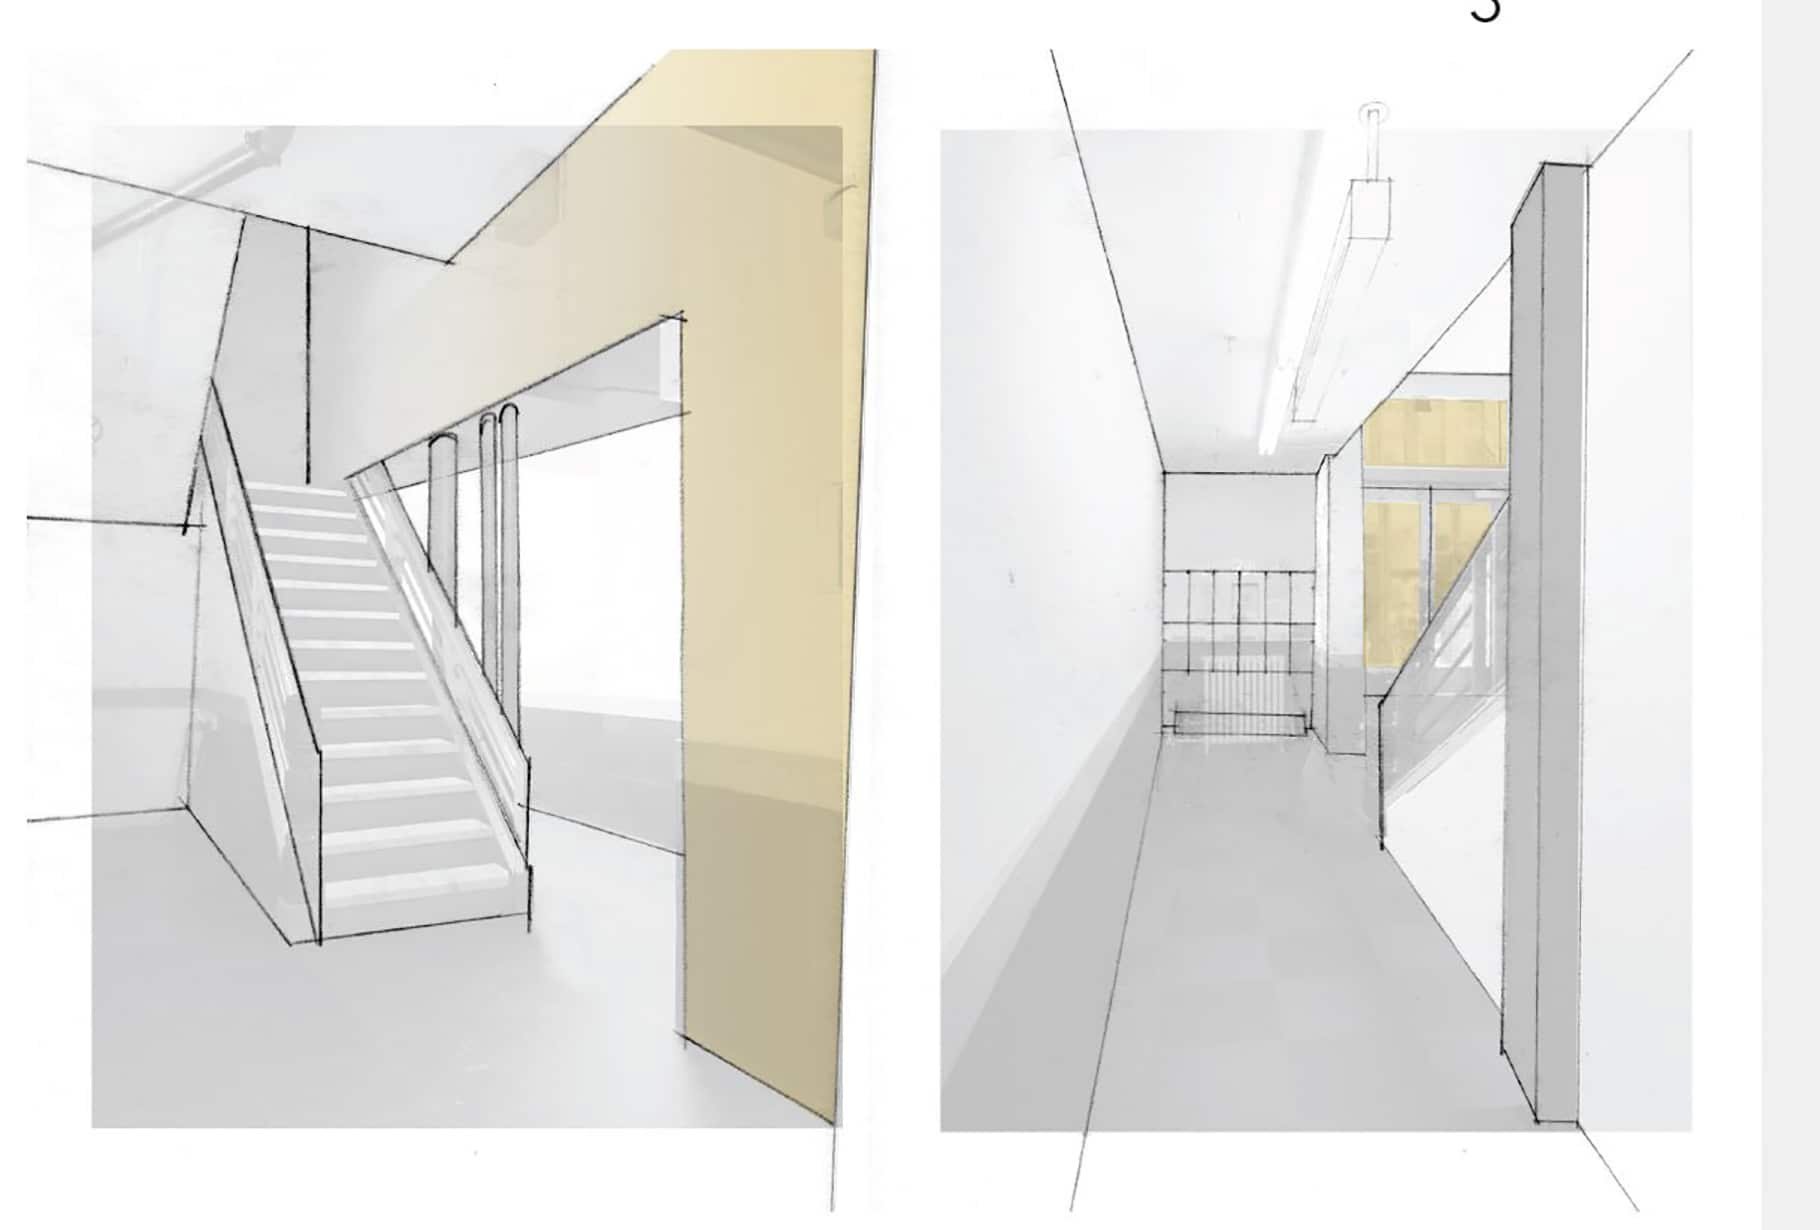 Soho NYC Residential Loft Lobby Architect Architecture Renovation Renovate Design Sketch